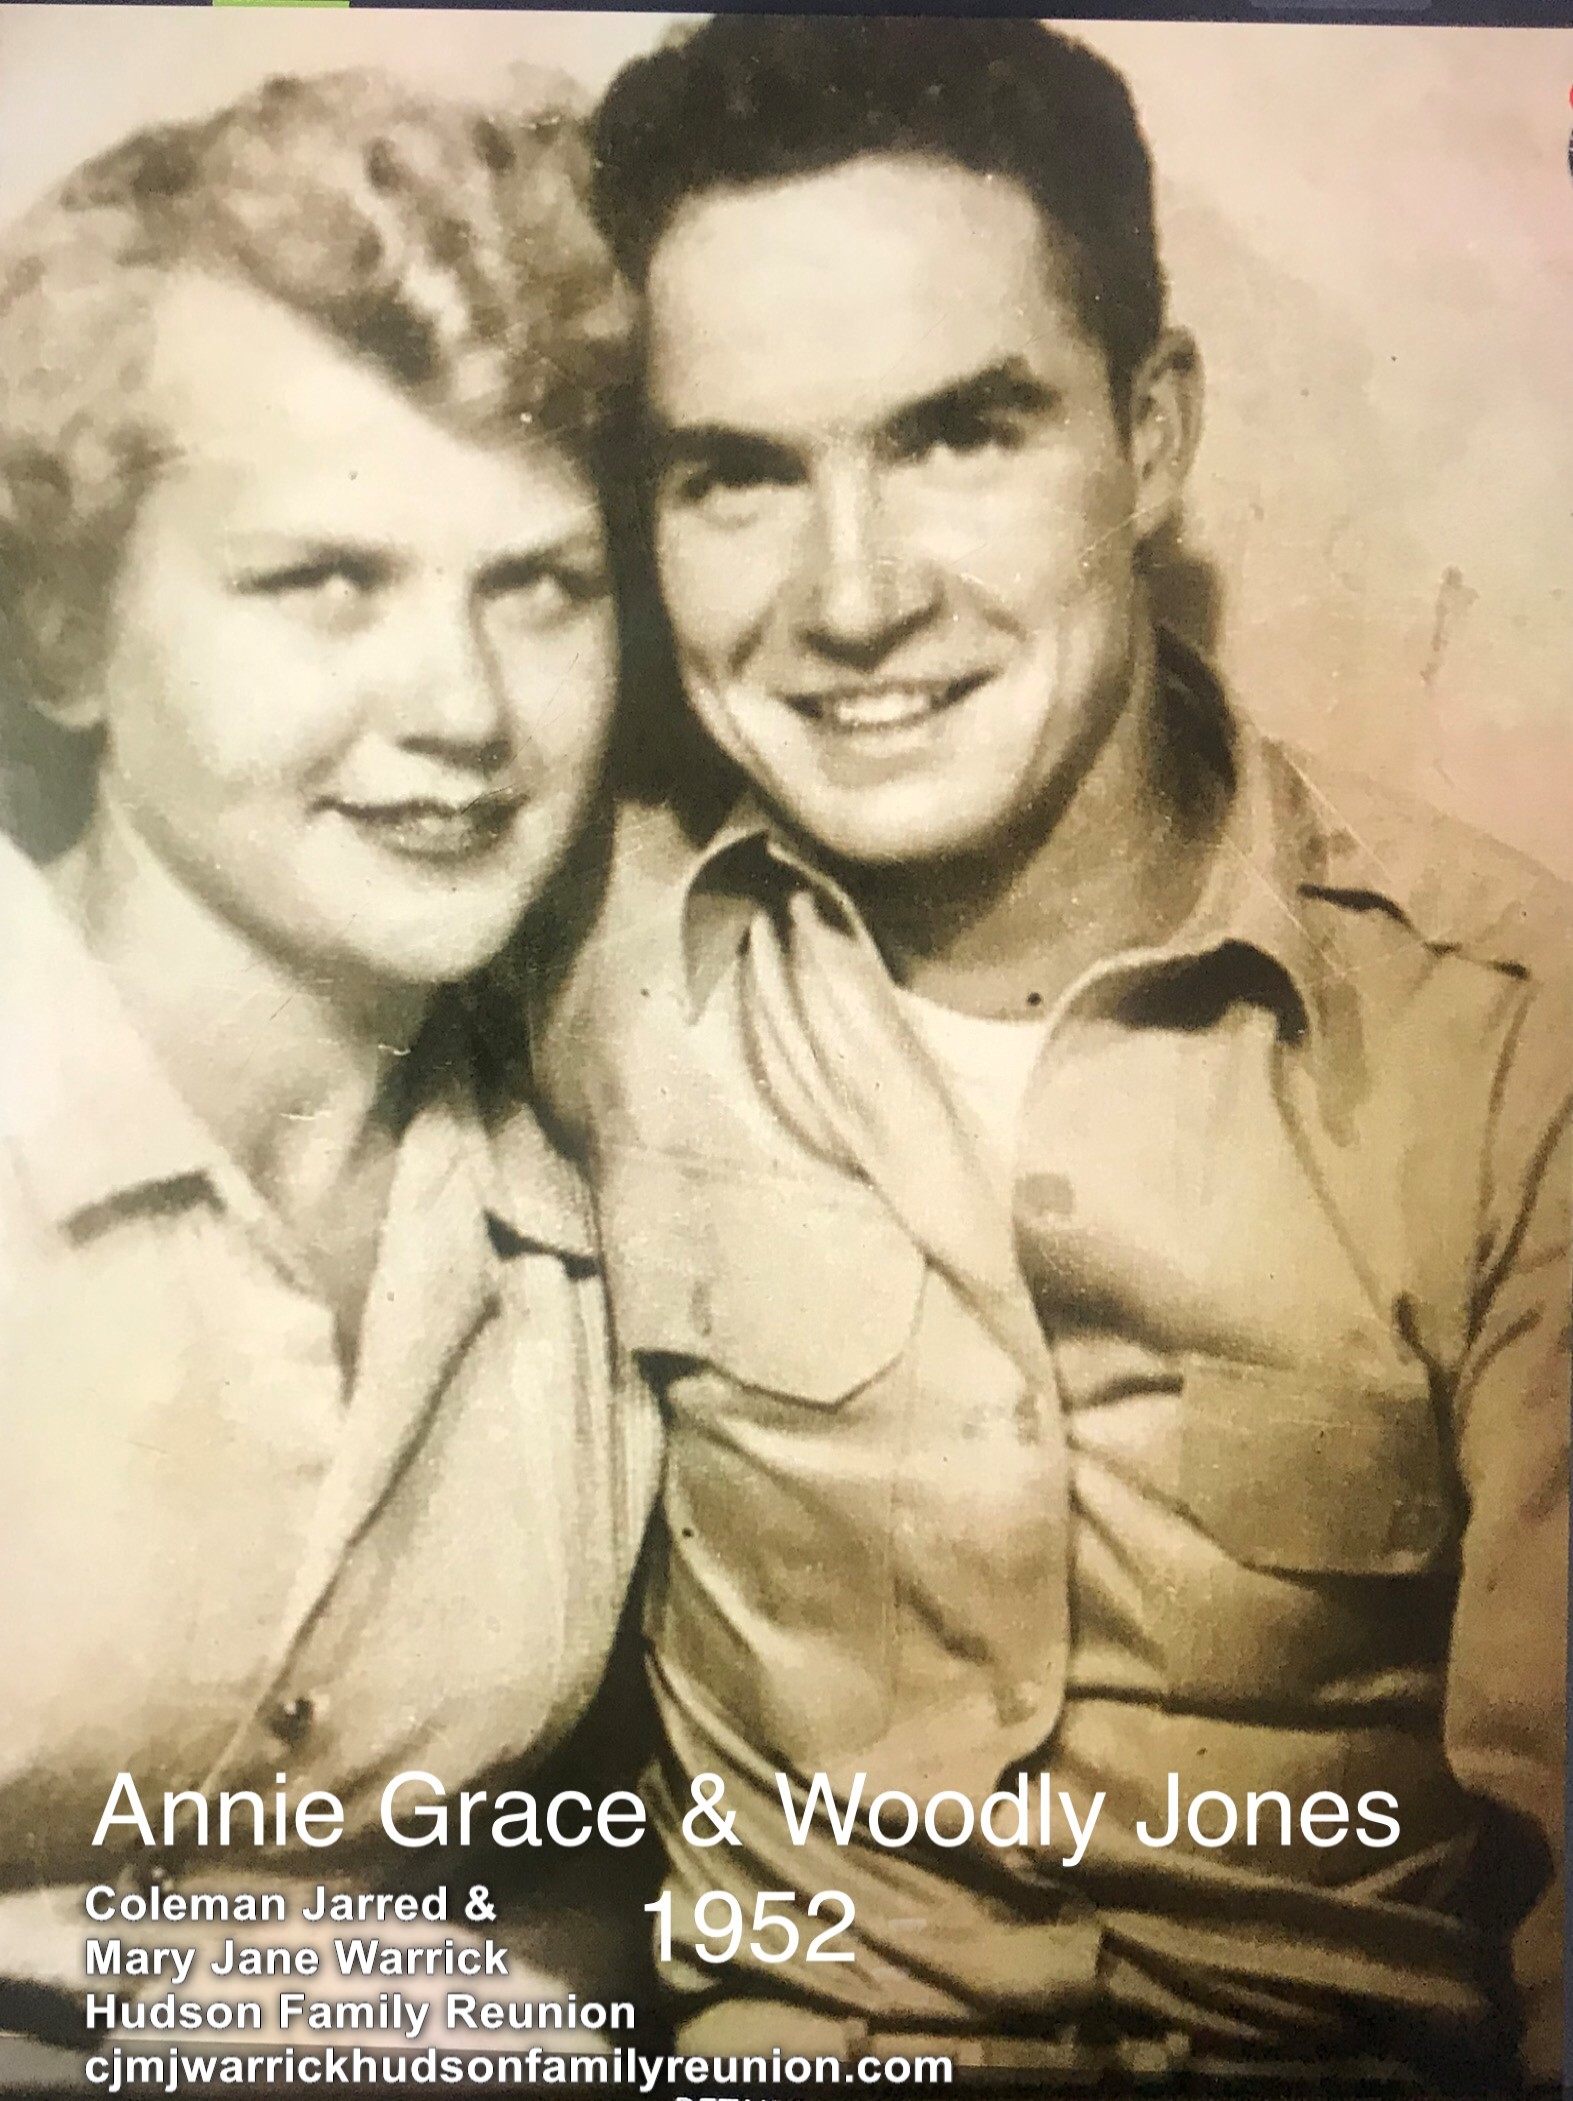 Woodly (W.H.) Hoover & Annie (Ann) Grace Willetts Jones